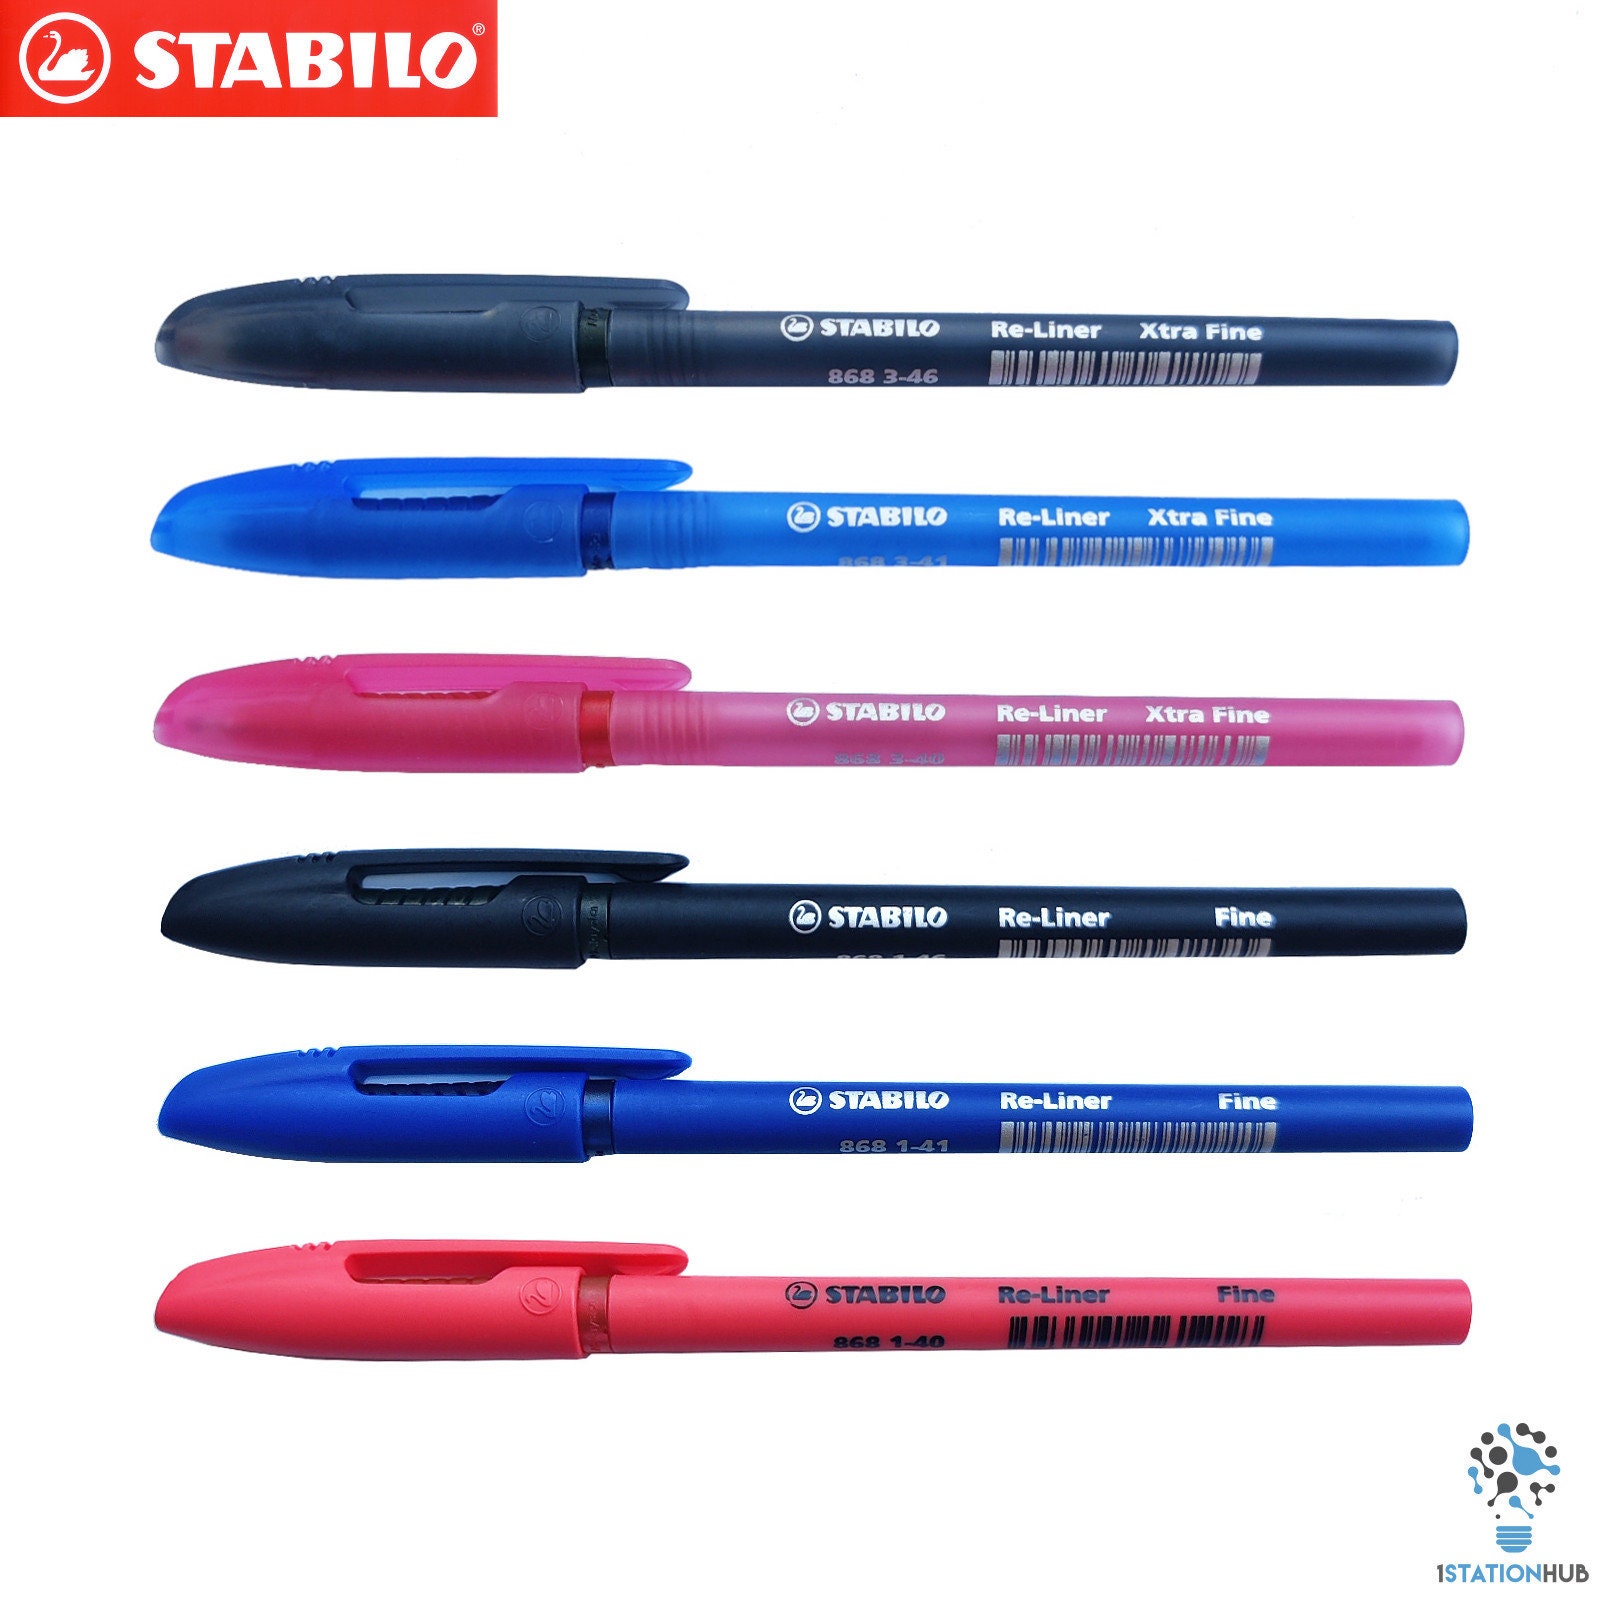 Stabilos – the best pen you've never heard of.